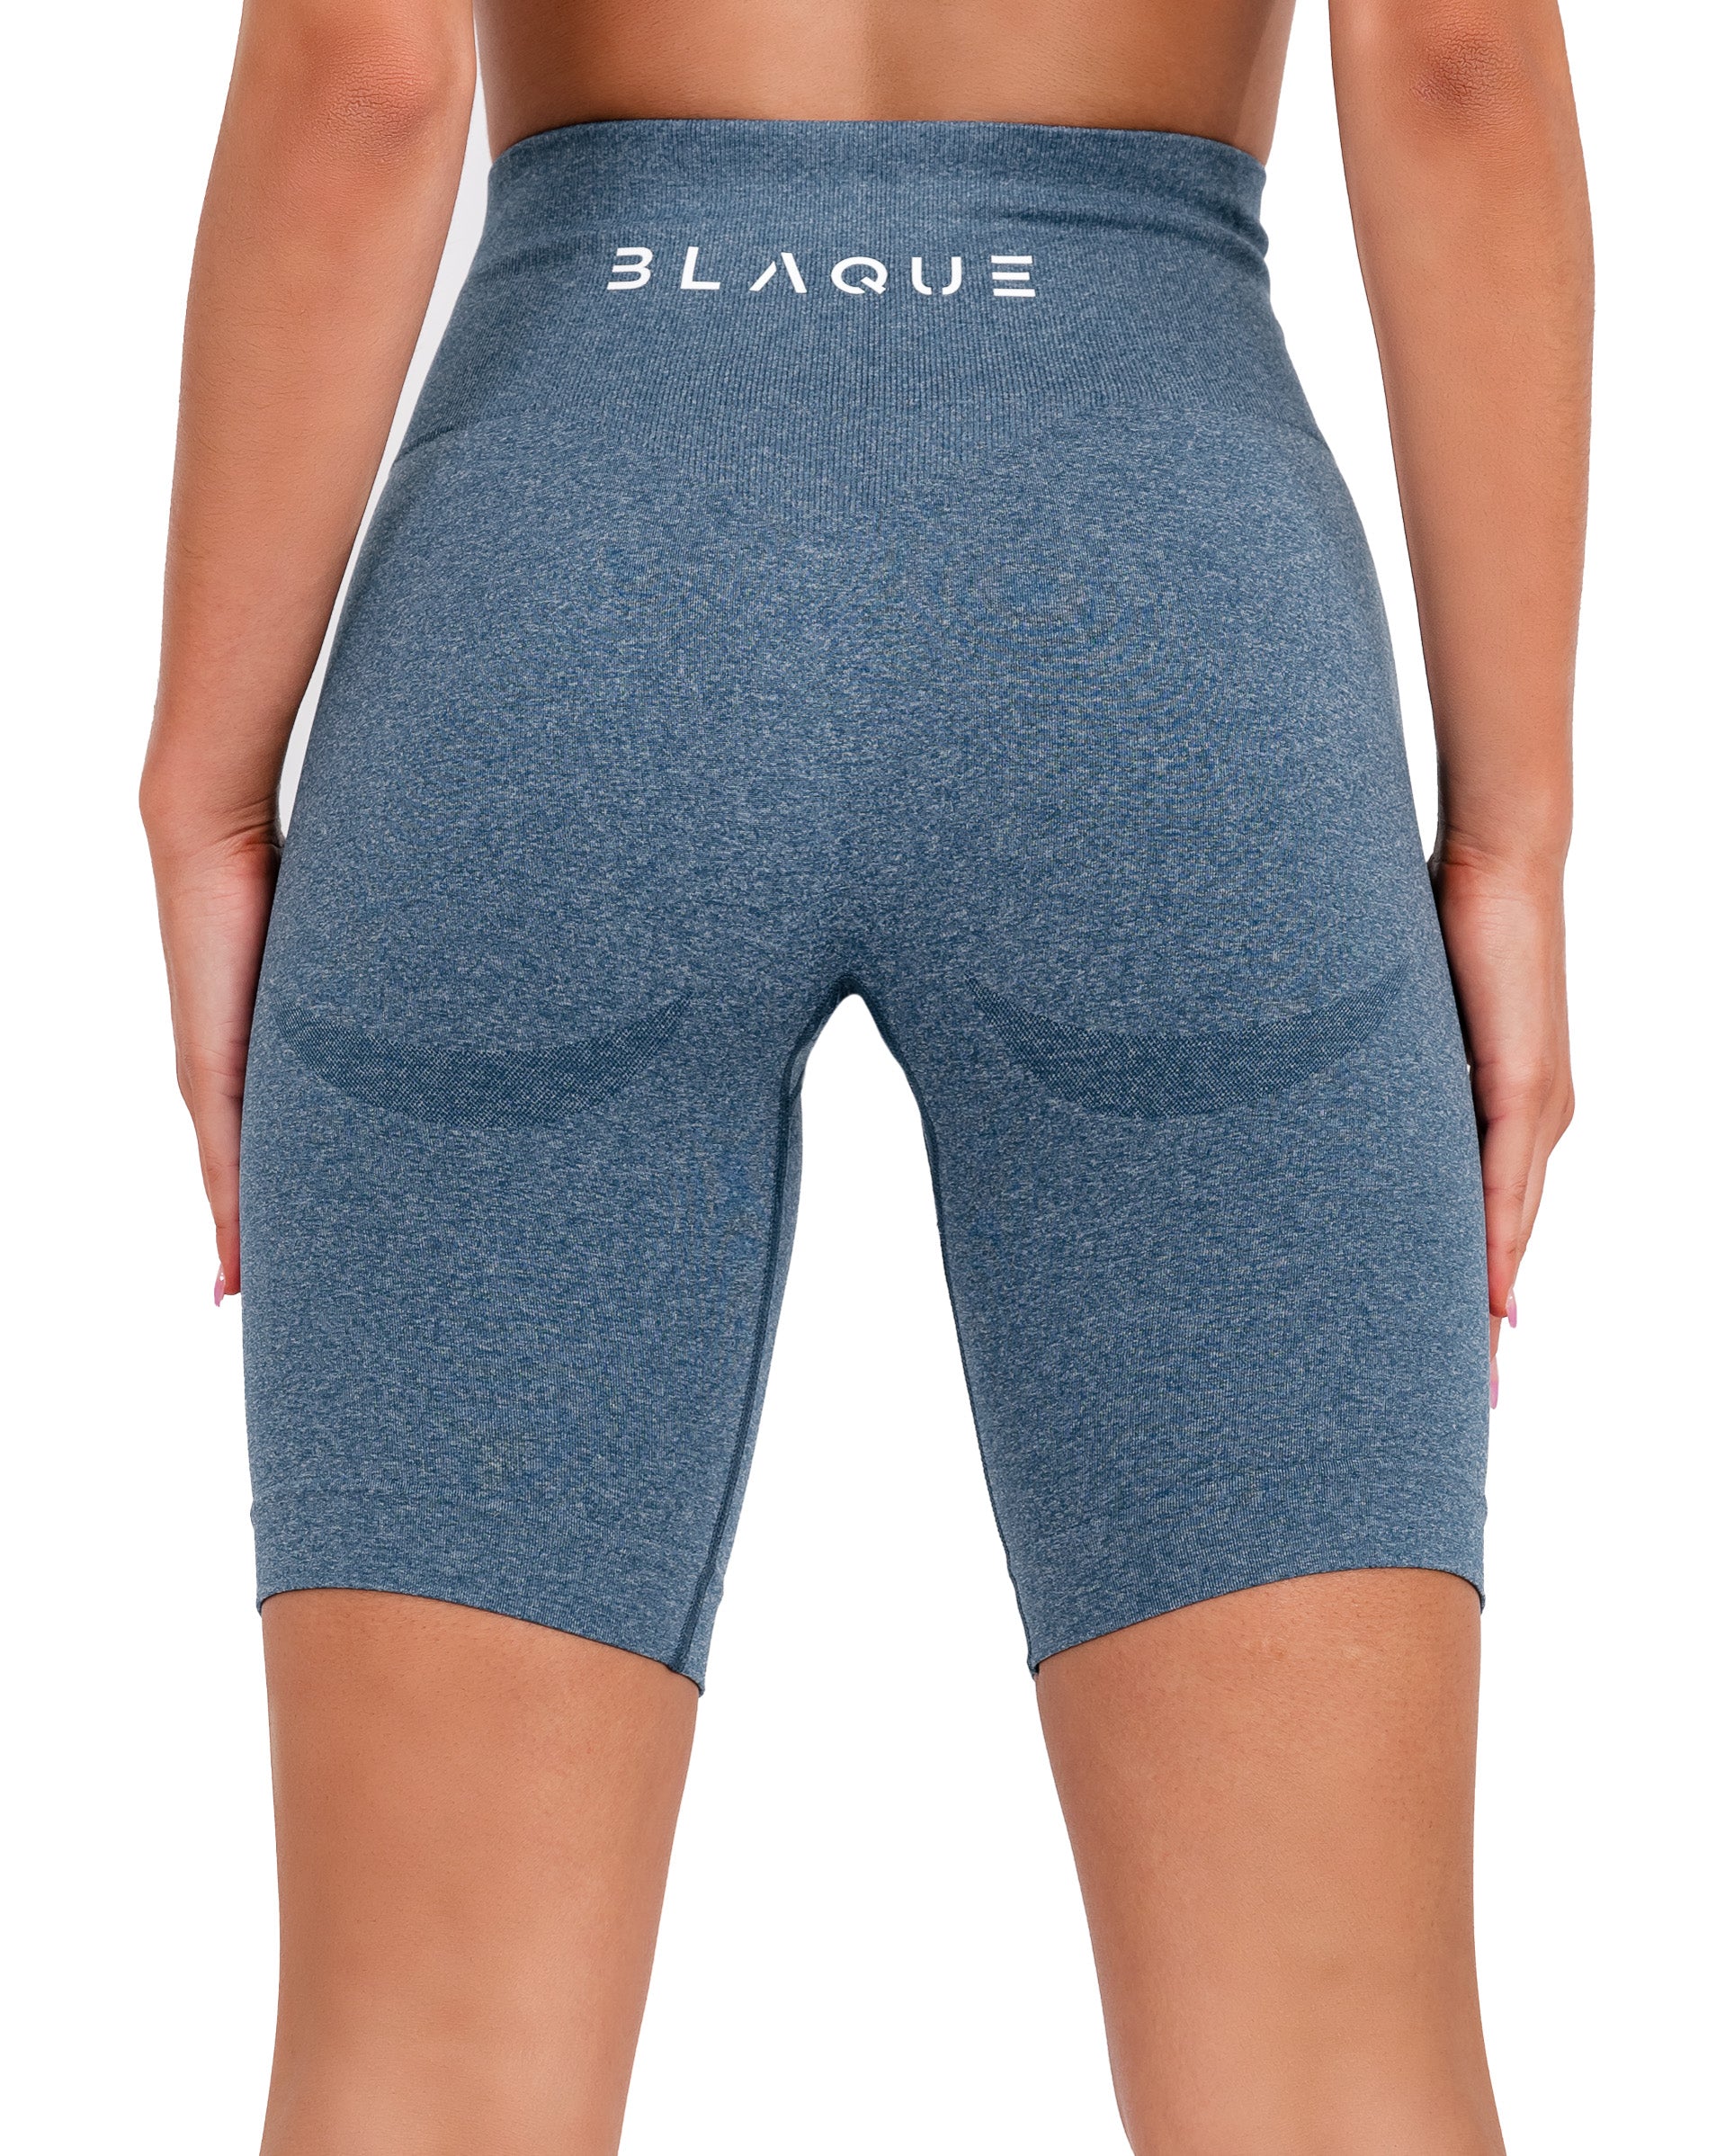 Overcast Shorts – Blaque Active